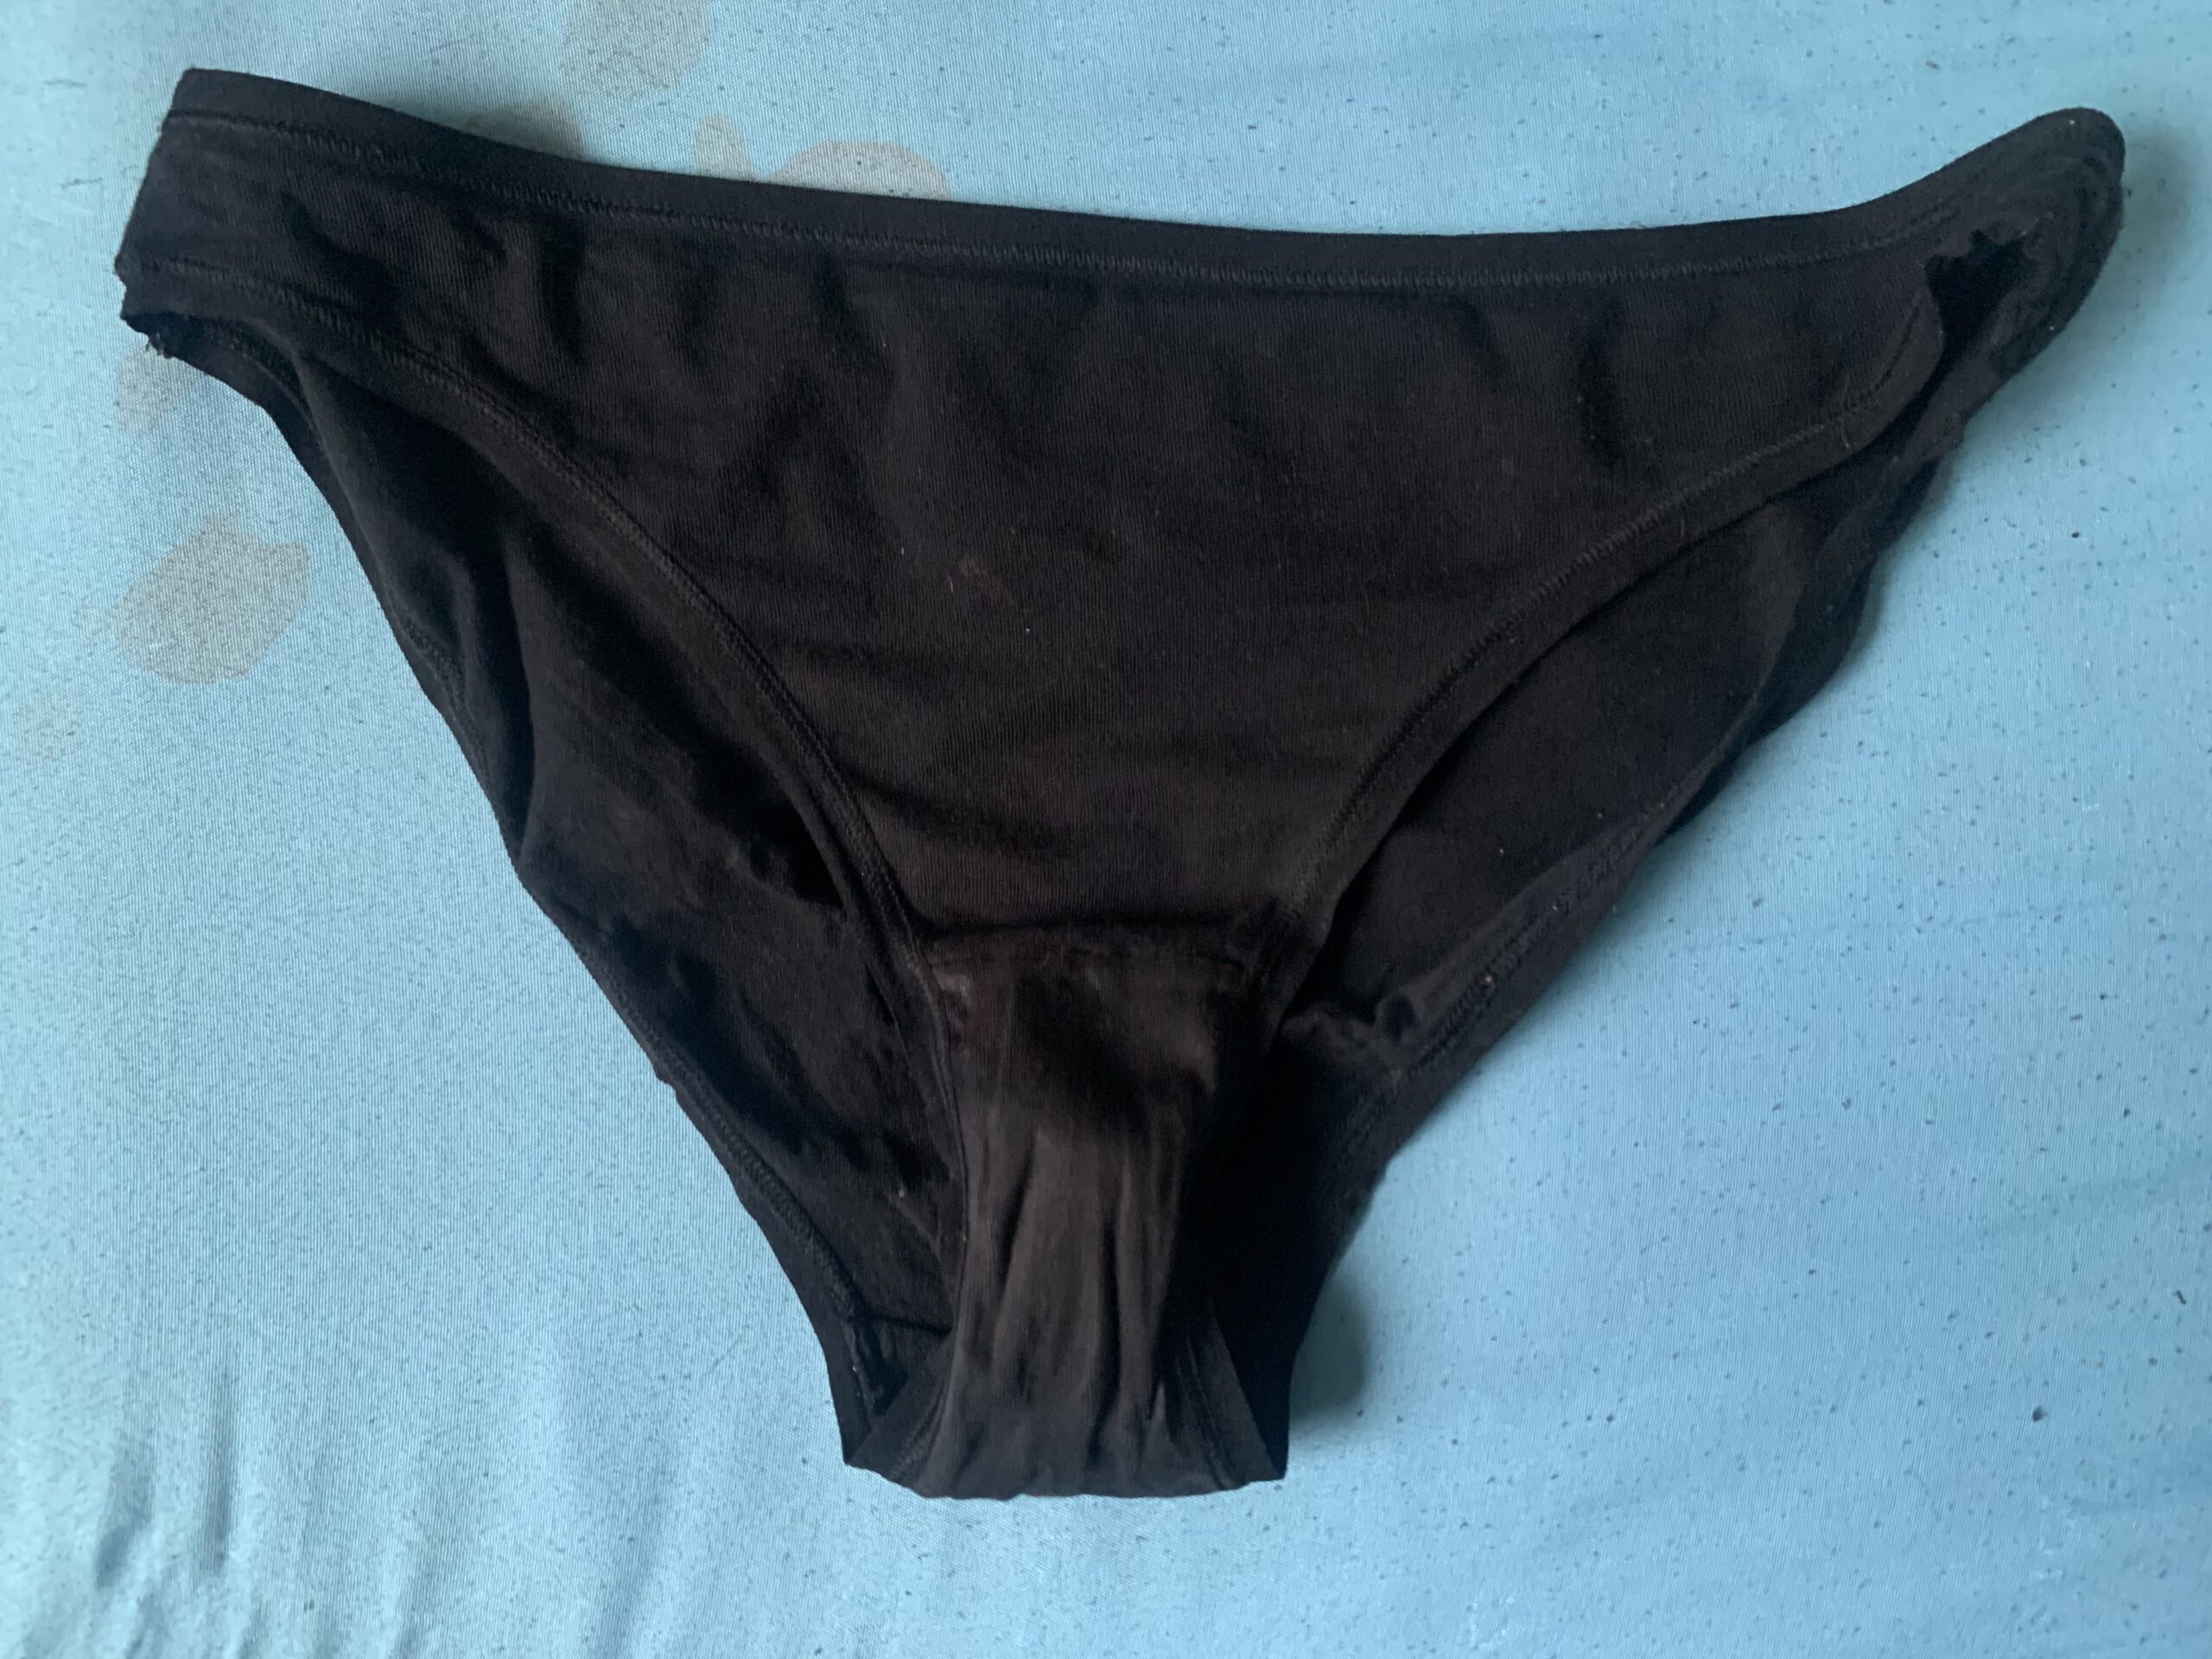 Period underwear - Knickery